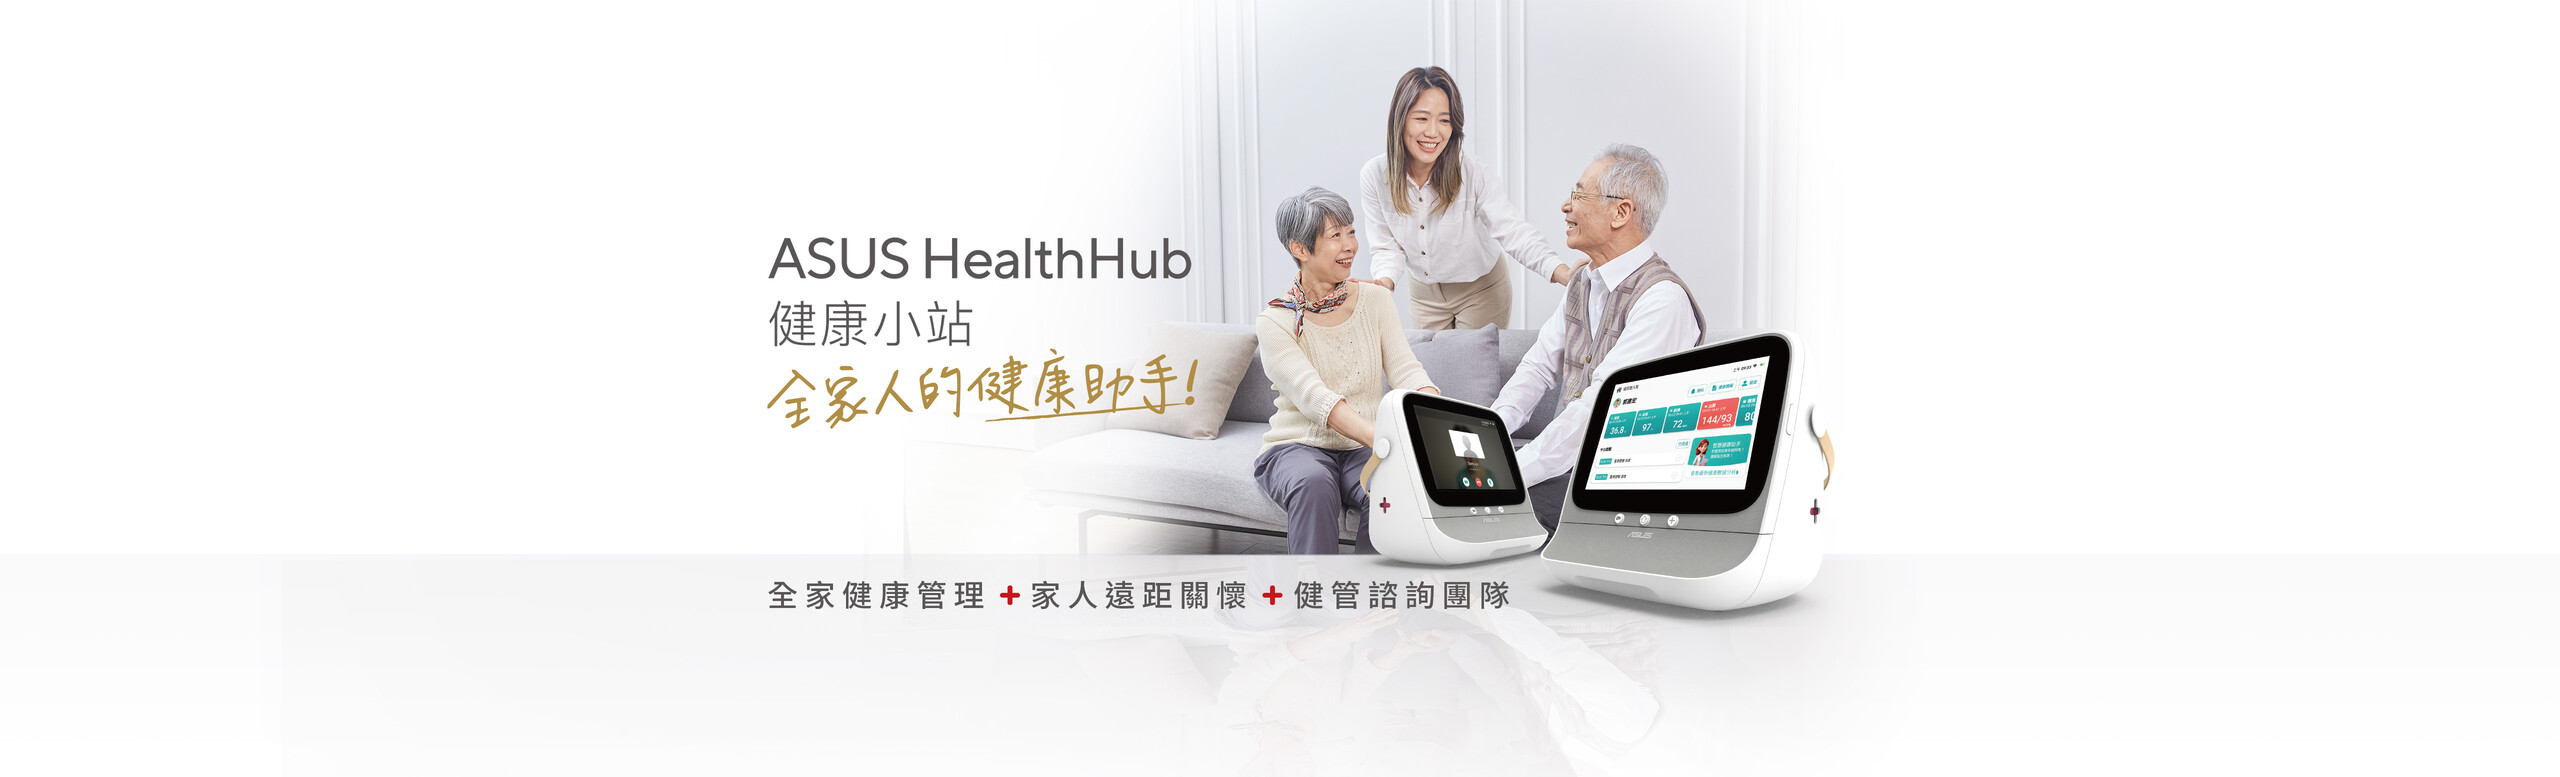 ASUS HealthHub 健康小站